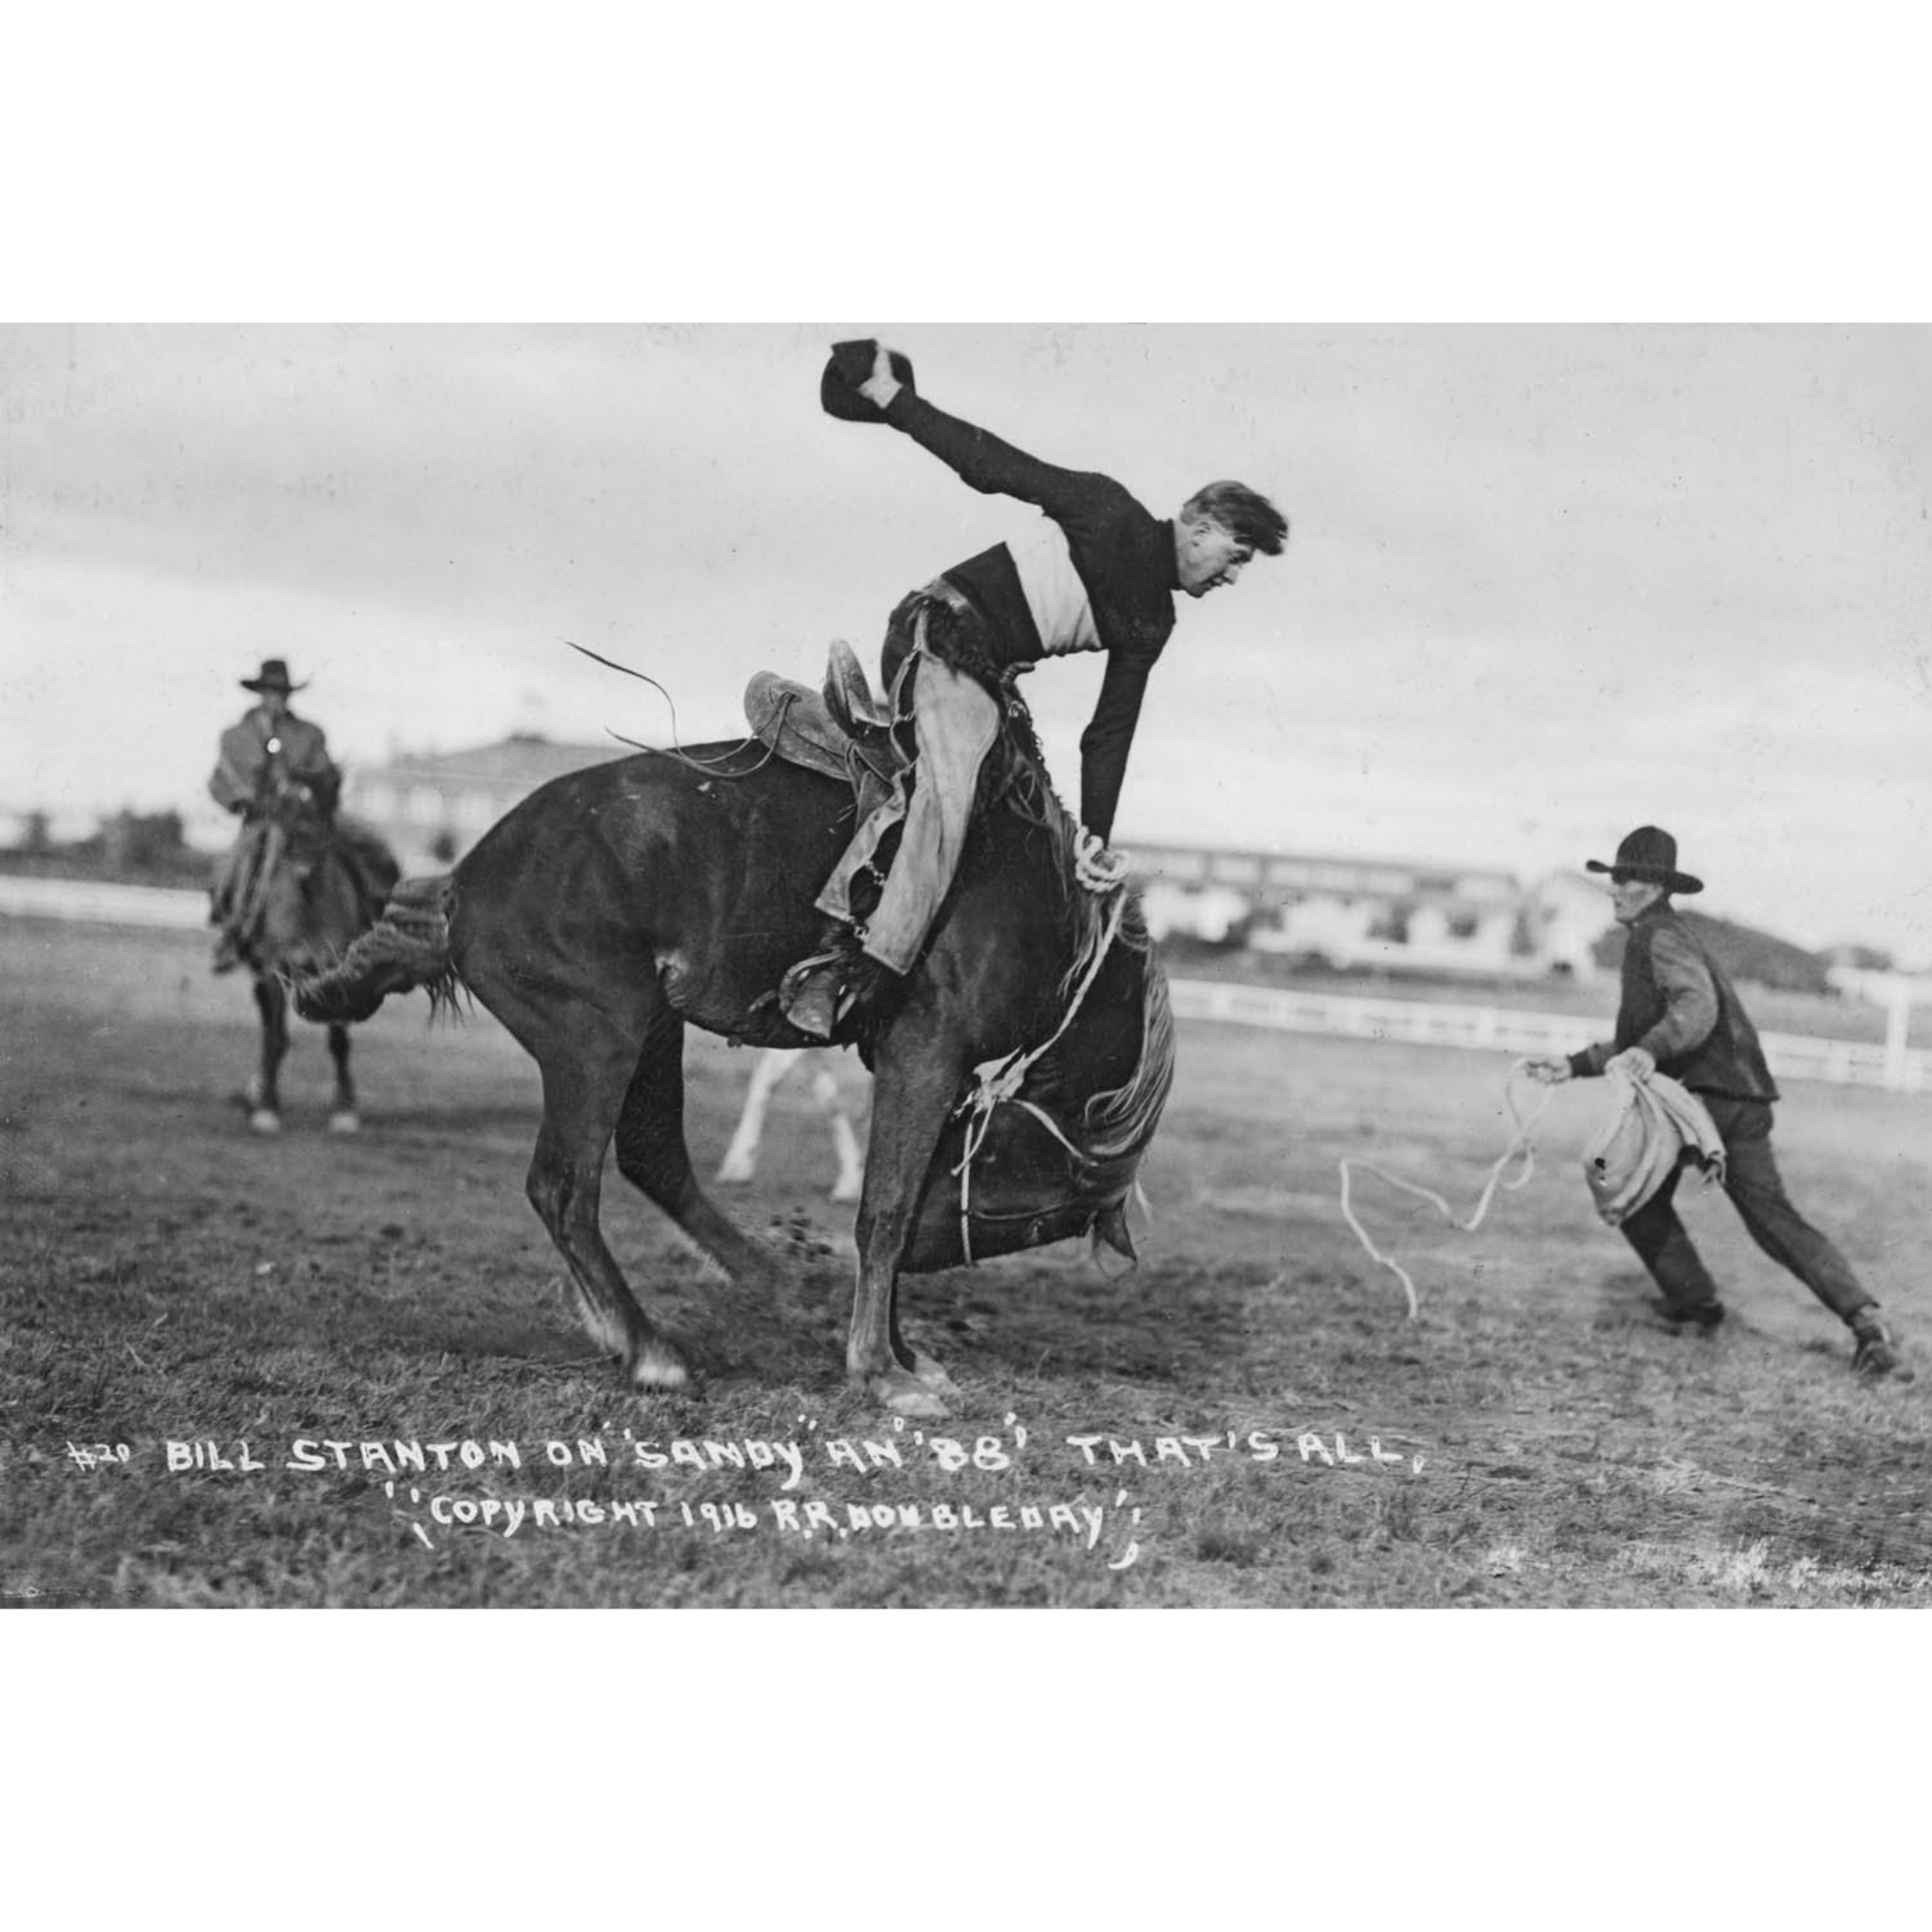 Rodeo Cowboys 2 - Bill Stanton on Sandy - ca. 1916 Photograph